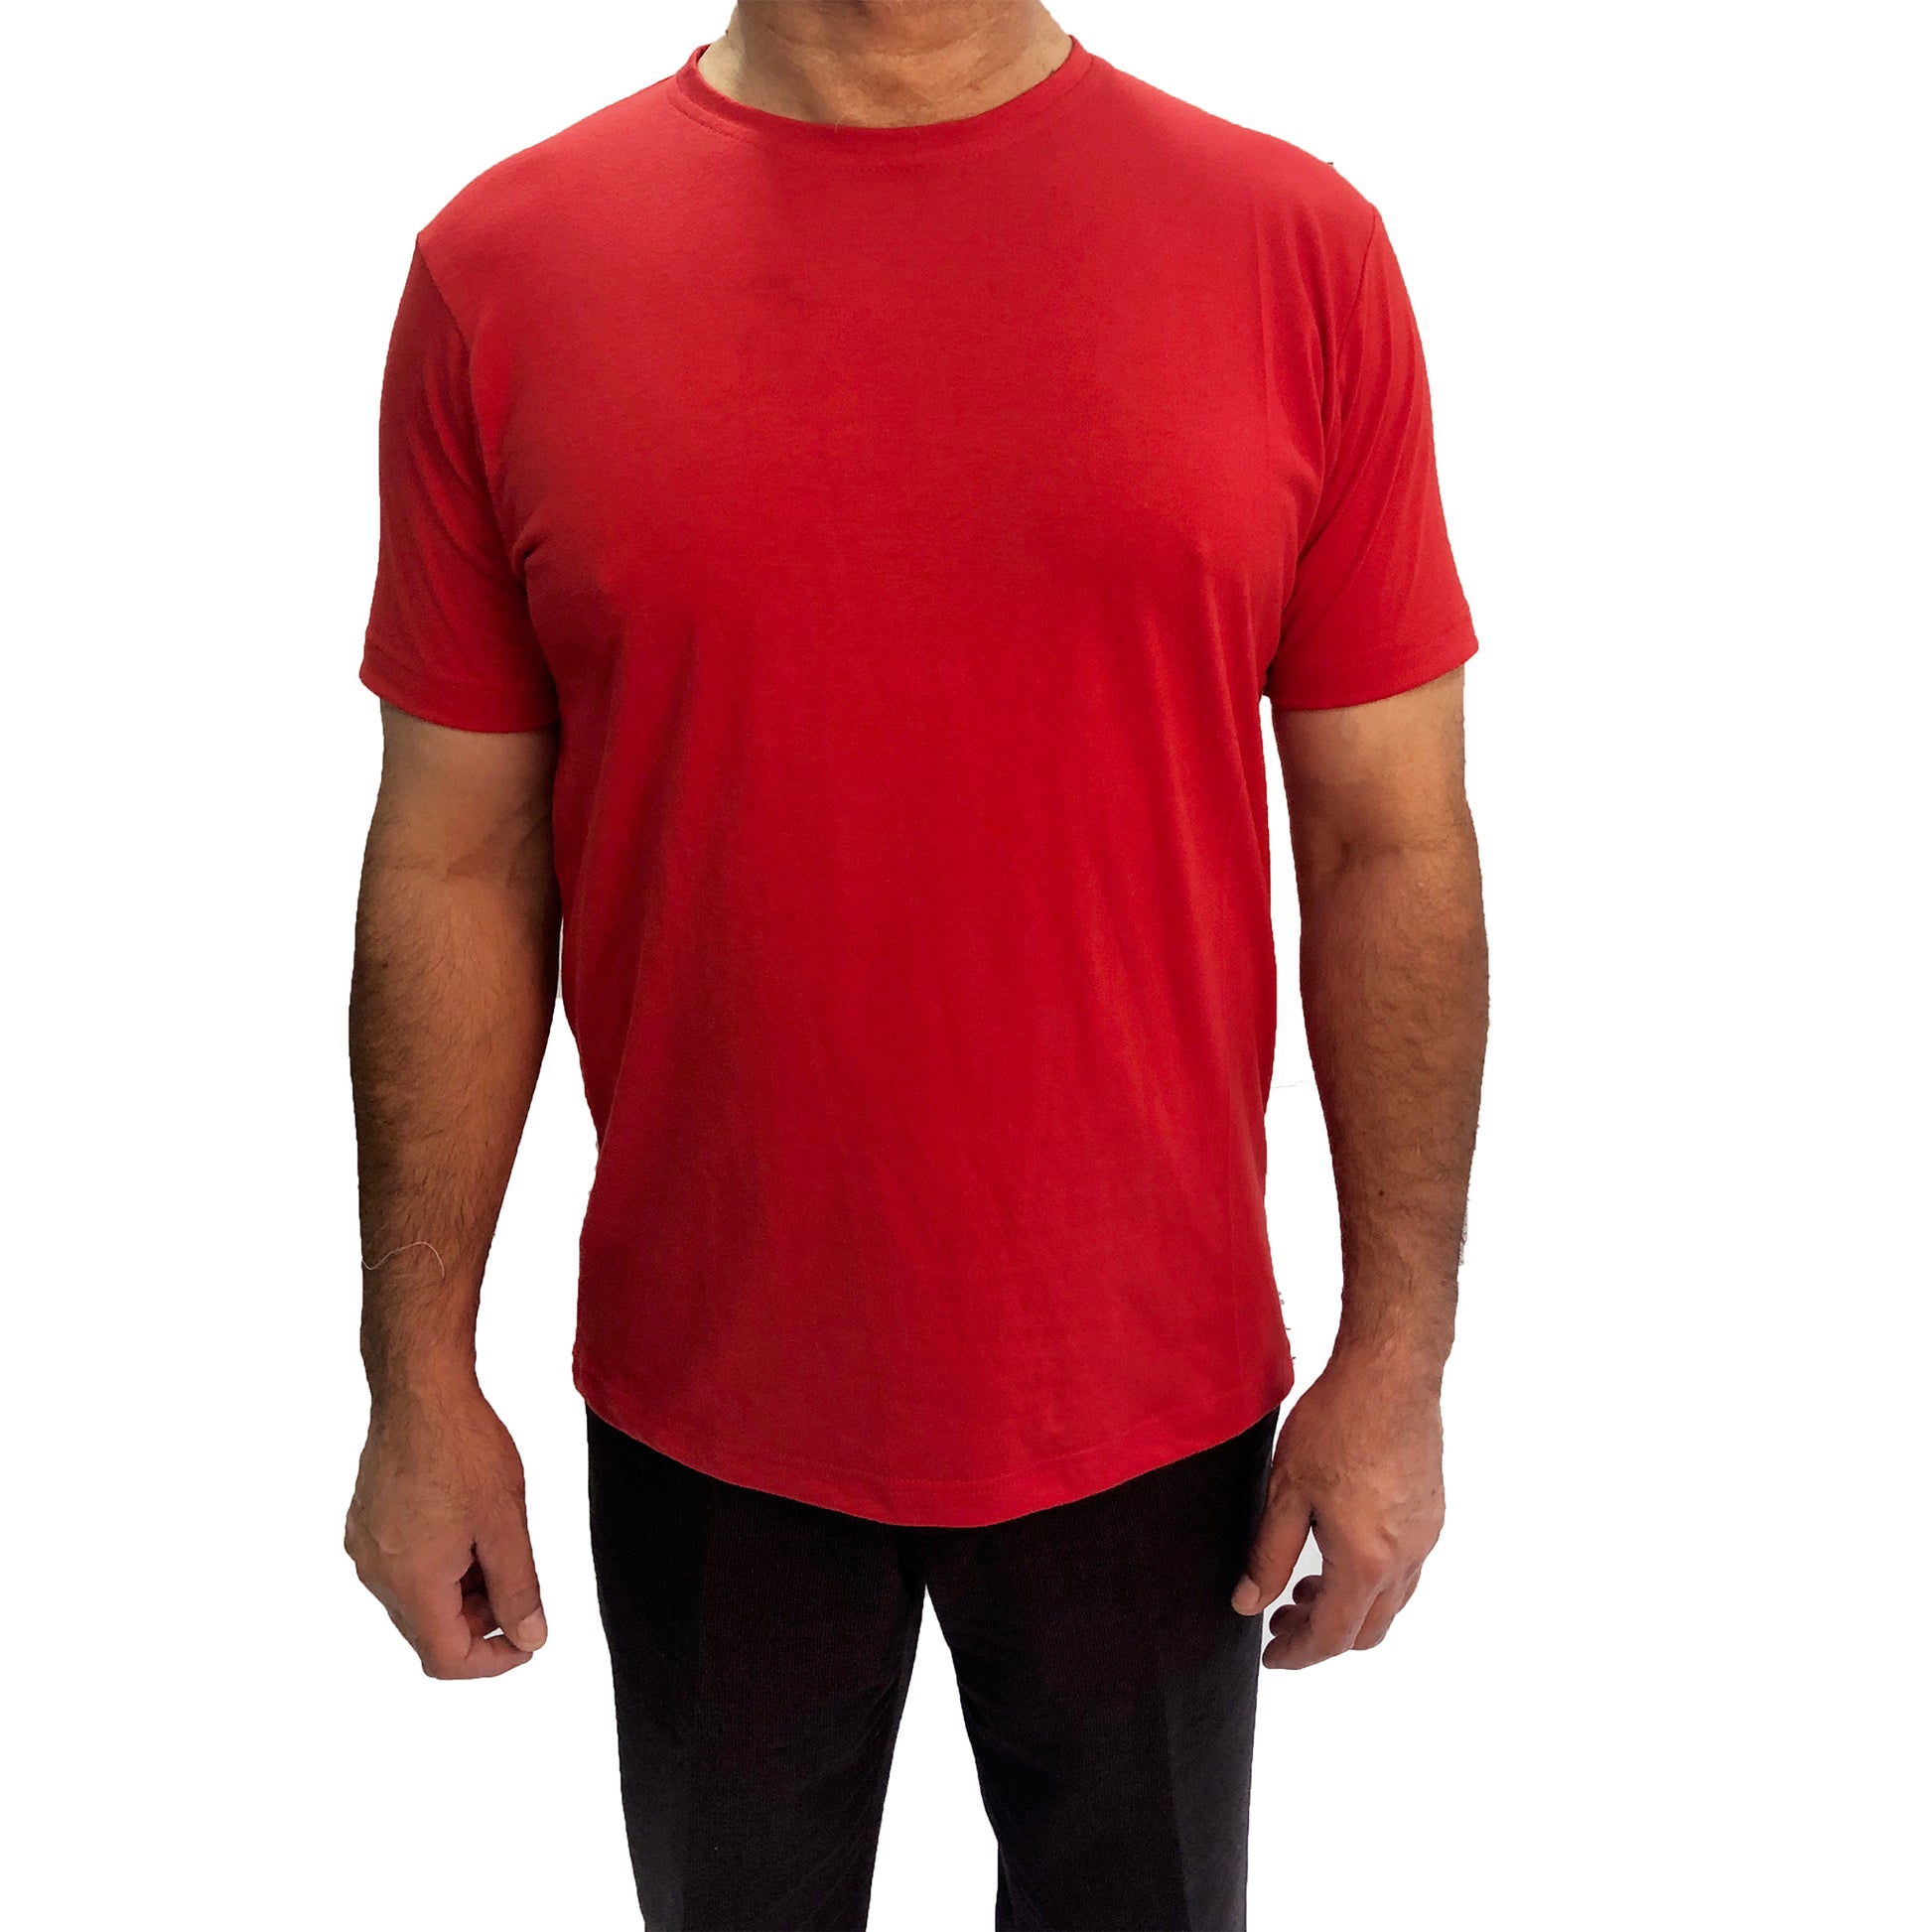 plain-red-t-shirt-for-men-for-gym